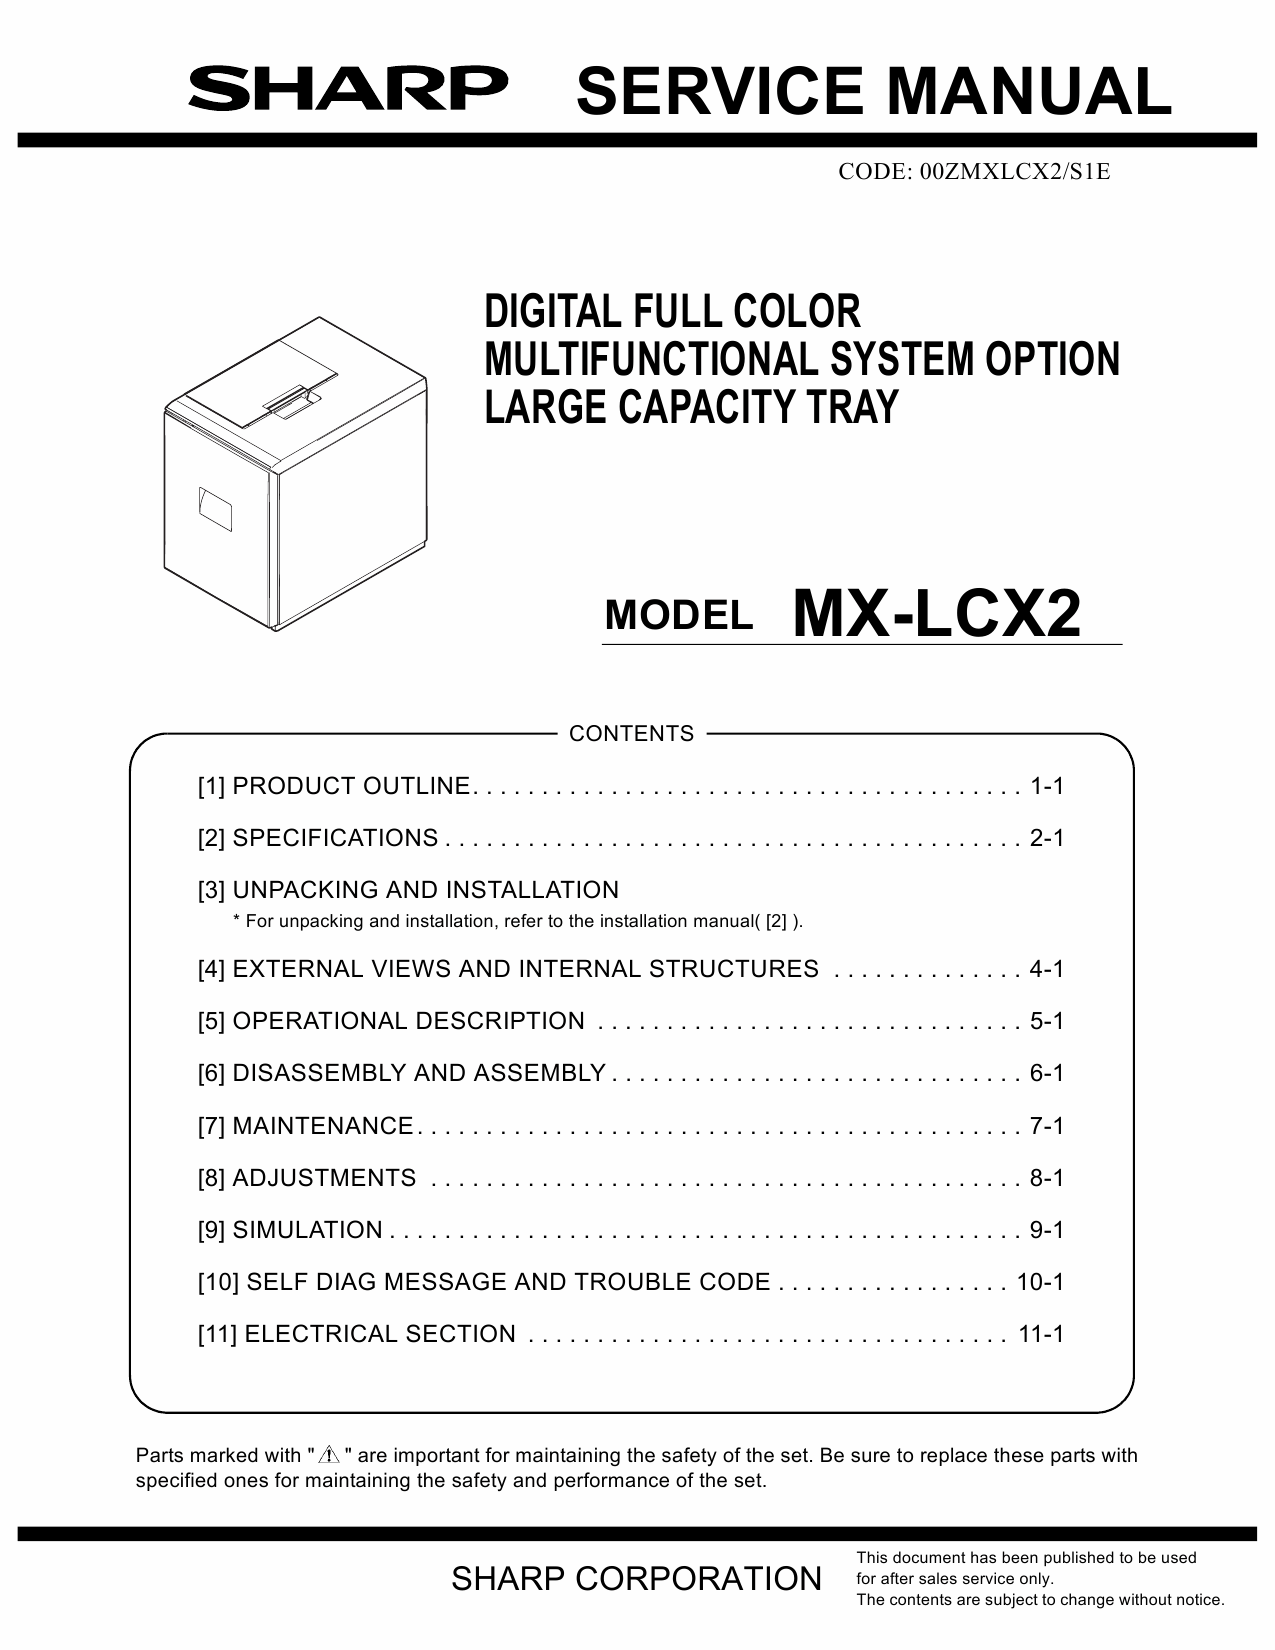 SHARP MX LCX2 Service Manual-1